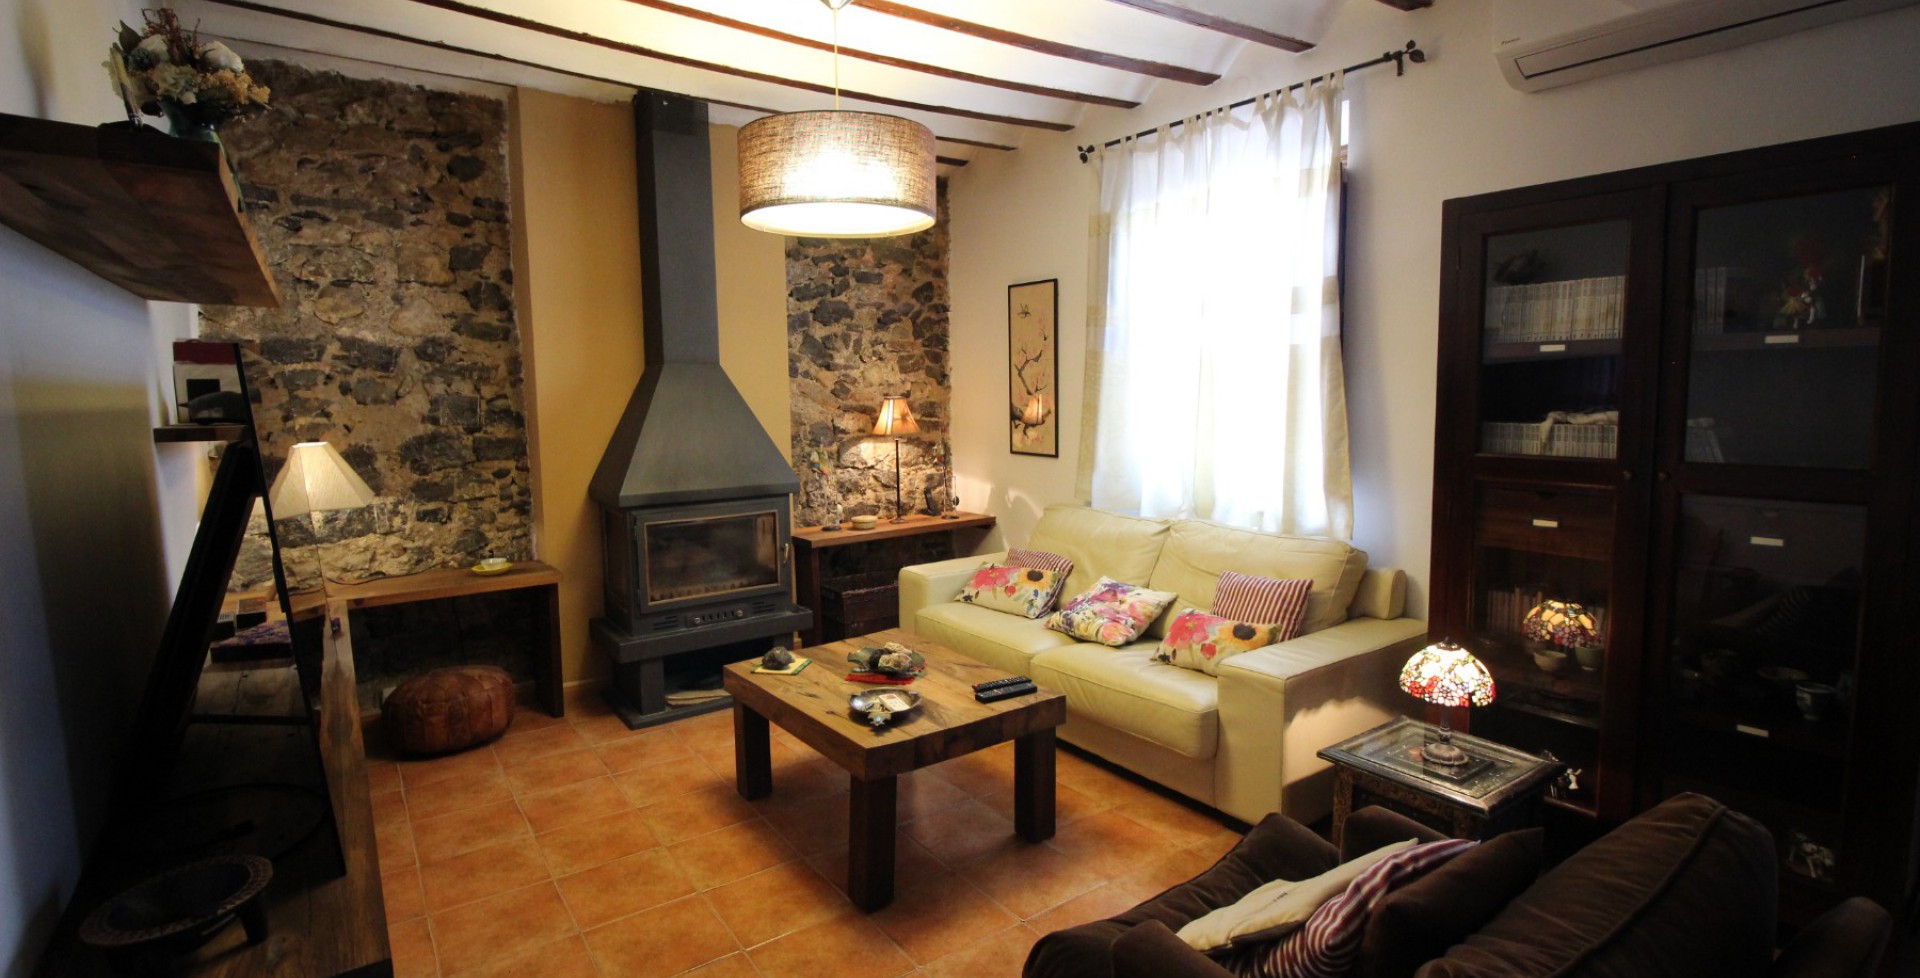  Spacious lounge at spectacular town house, Blanca, Murcia, Spain